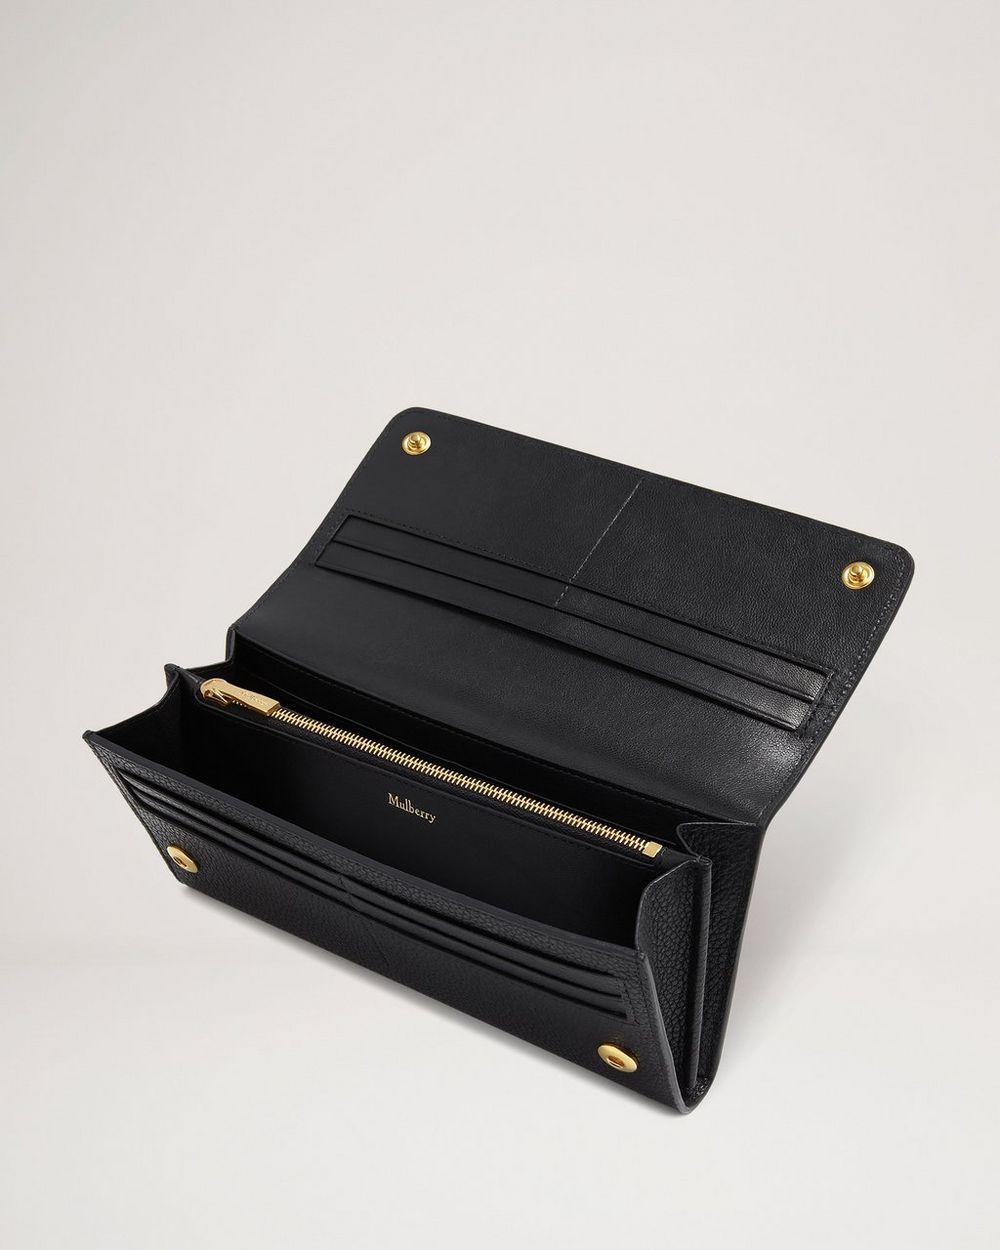 Prada Gold Metallic Leather Continental Wallet